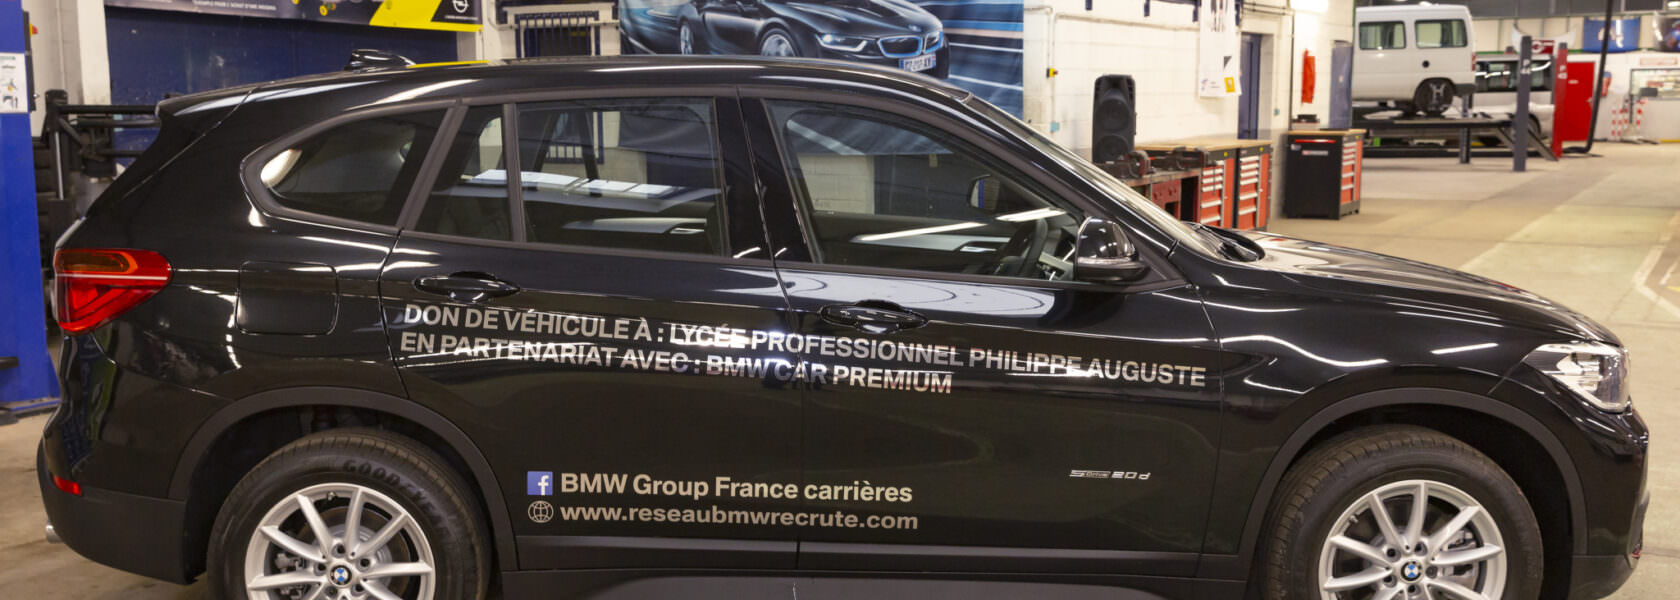 BMW X1 apprentis france 2020